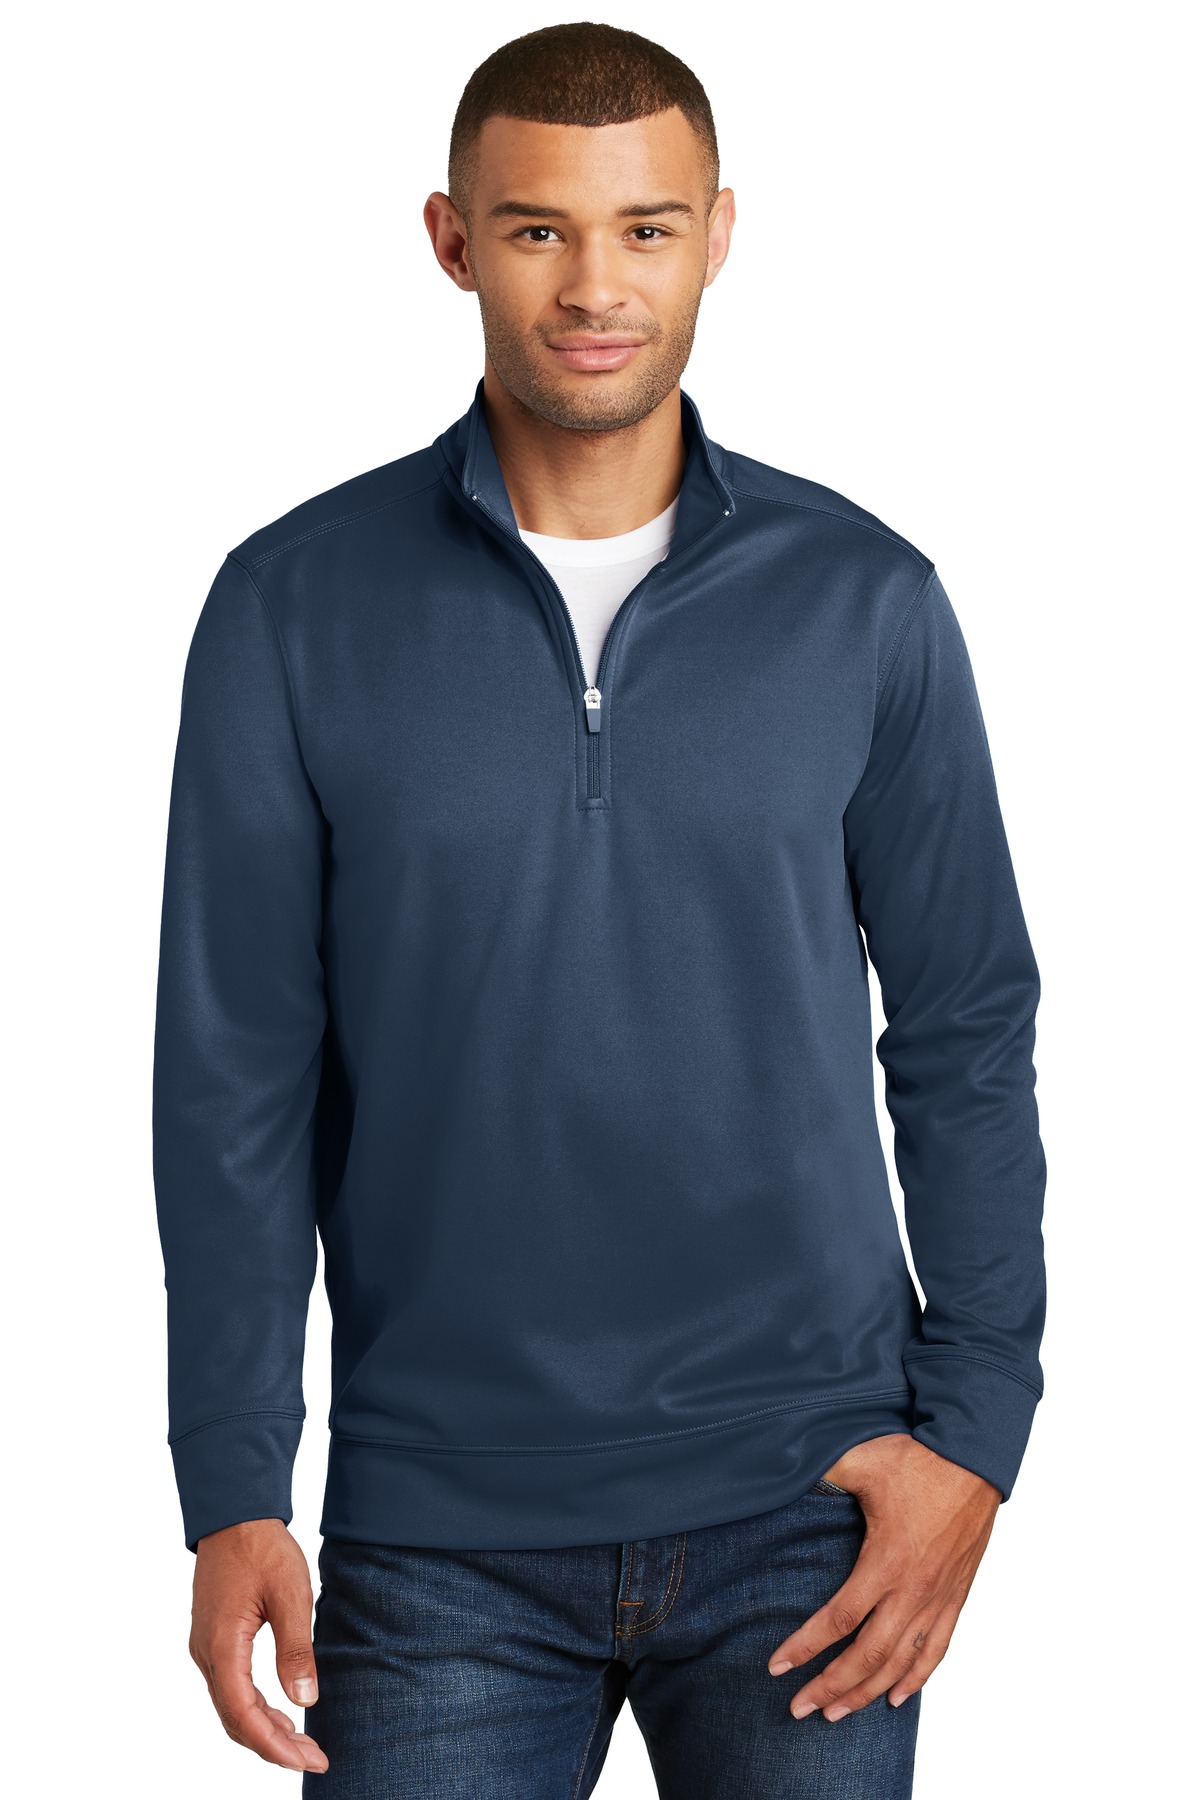 Port & Company# PC590Q, Performance Fleece 1/4-Zip Pullover Sweatshirt